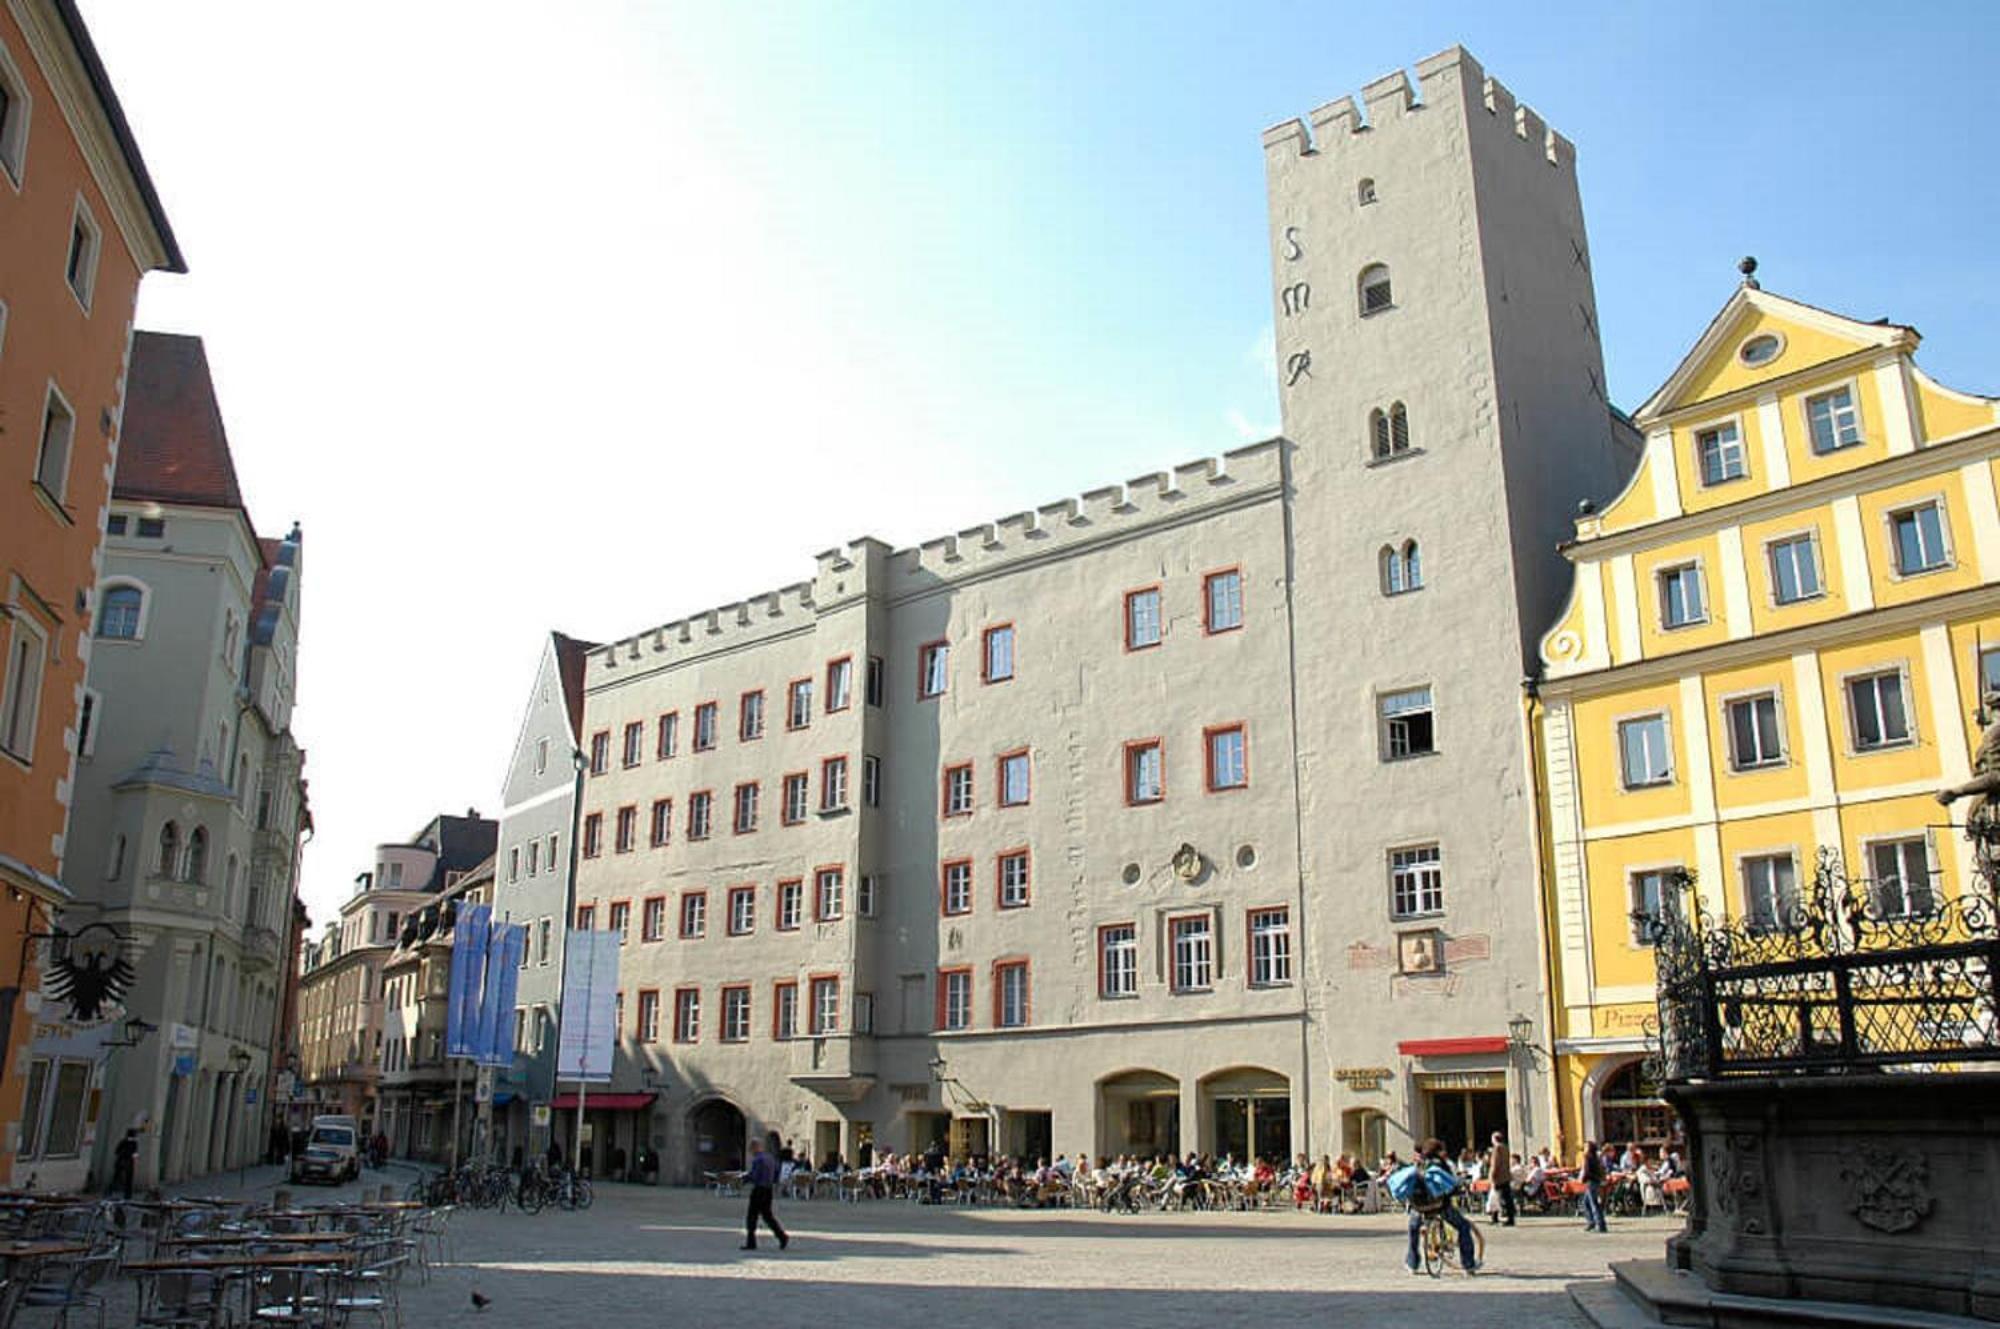 Hotel Das Regensburg Buitenkant foto